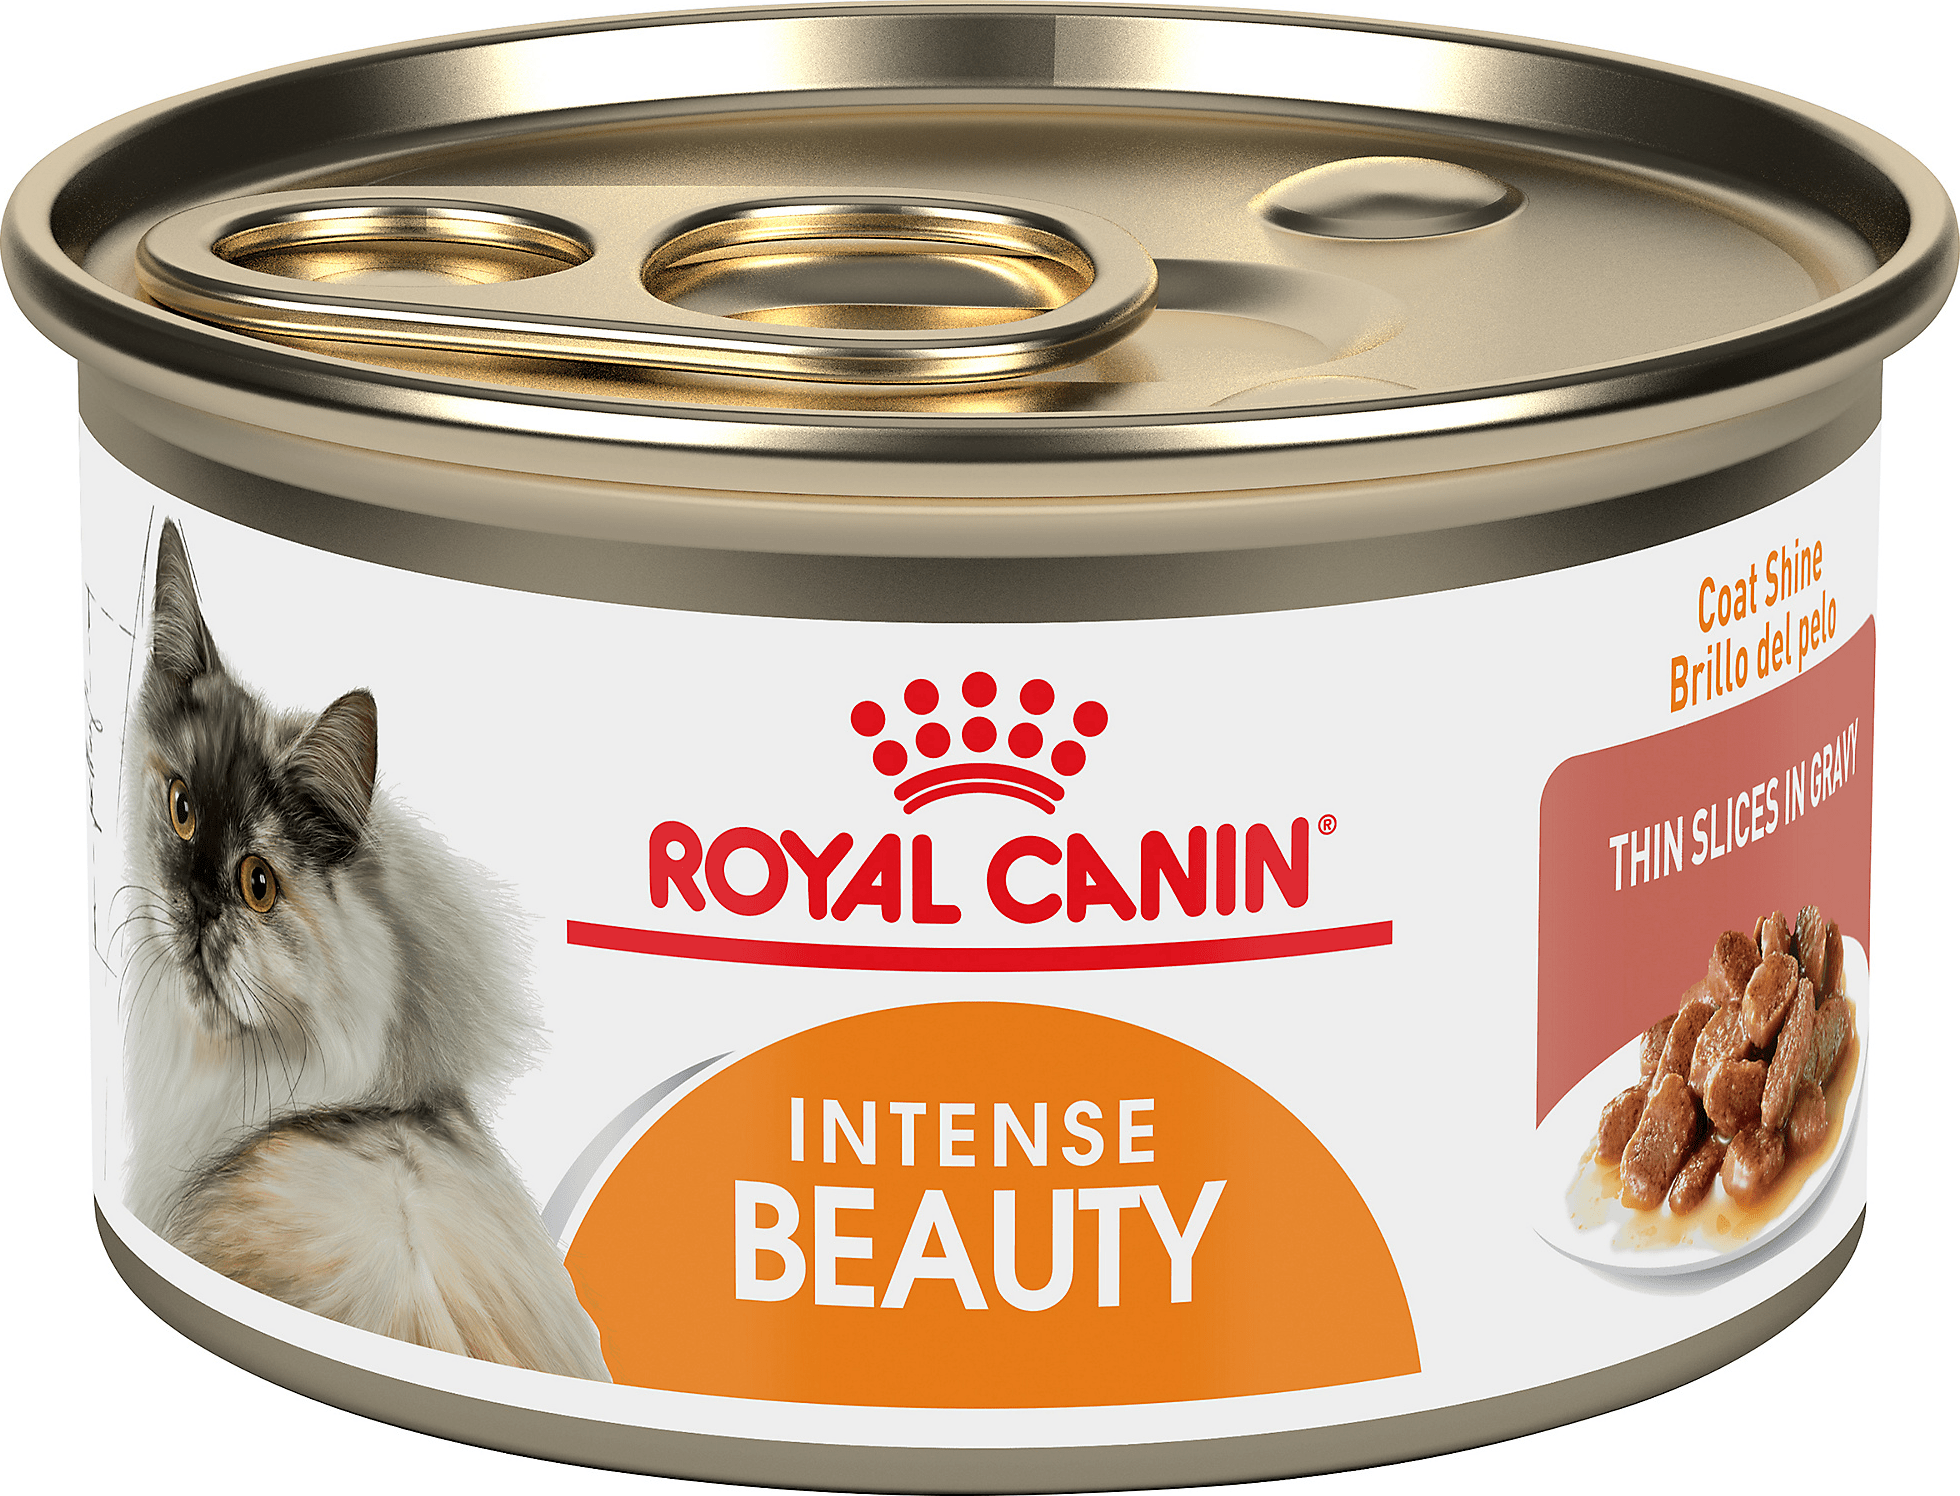 Royal Canin Intense Beauty Thin Slices In Gravy